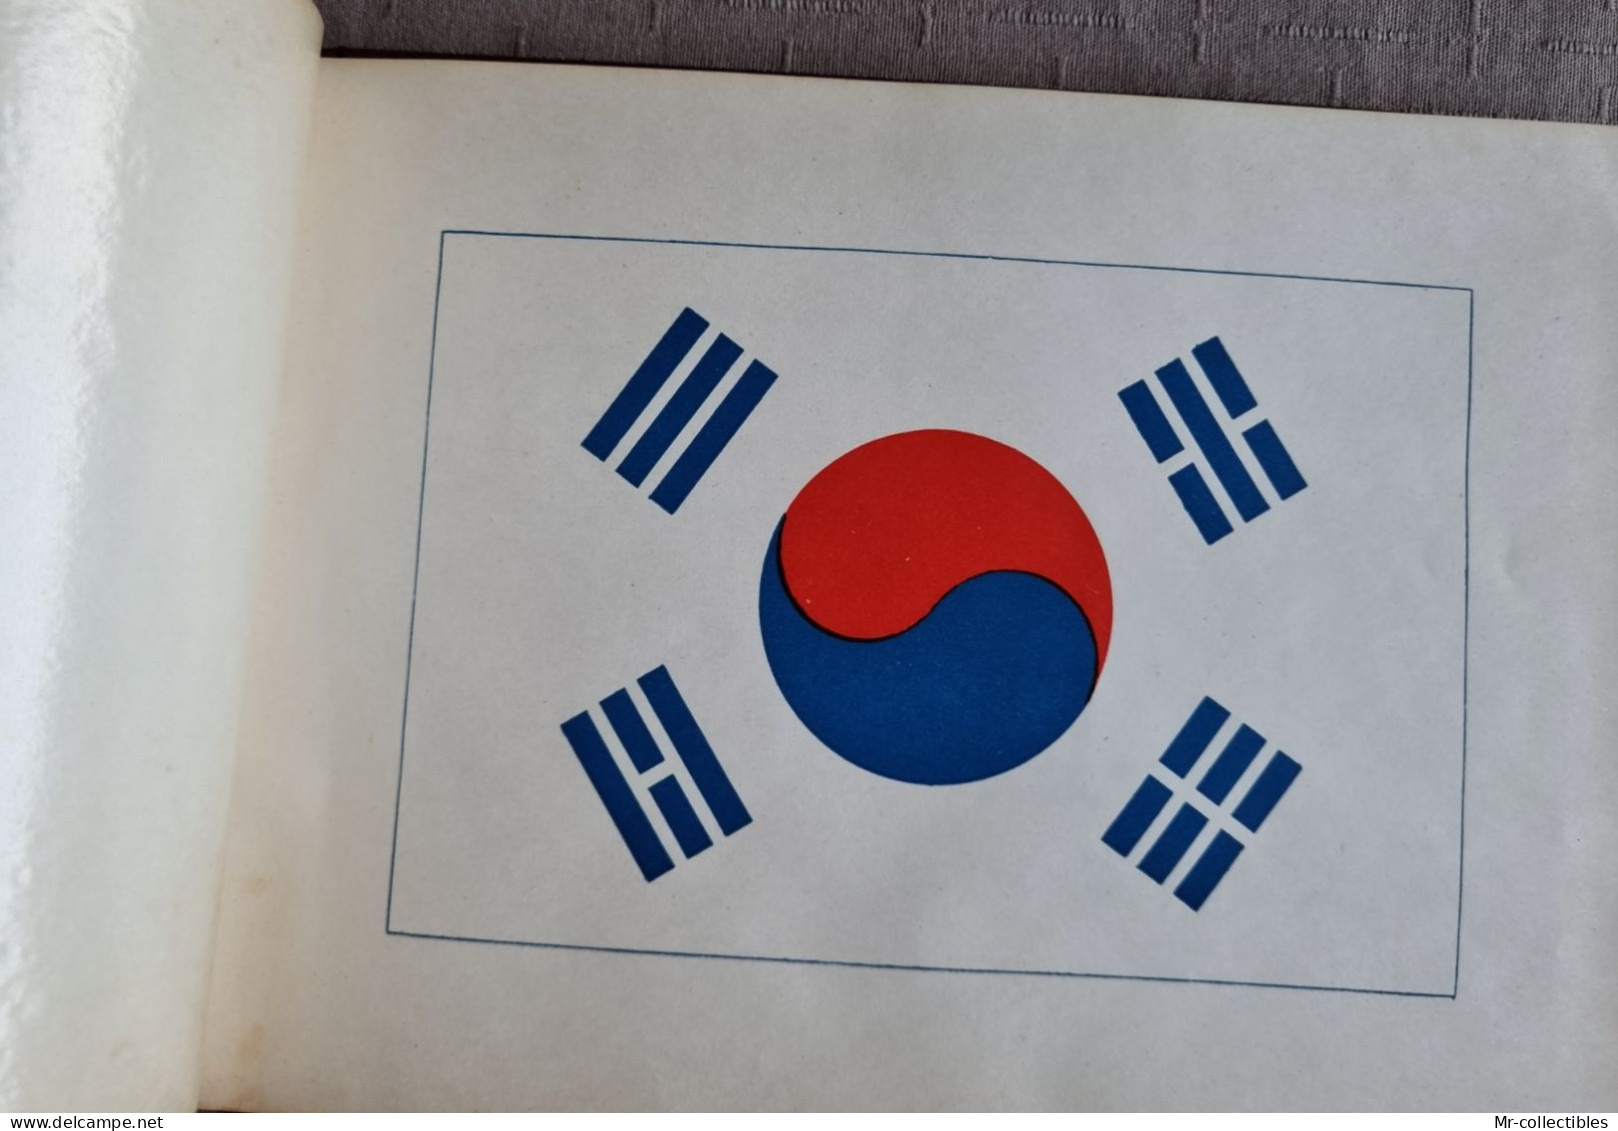 Korea 49 Stamps. Booklet 1964 XV Universal Postal Congress Vienna - Korea, South